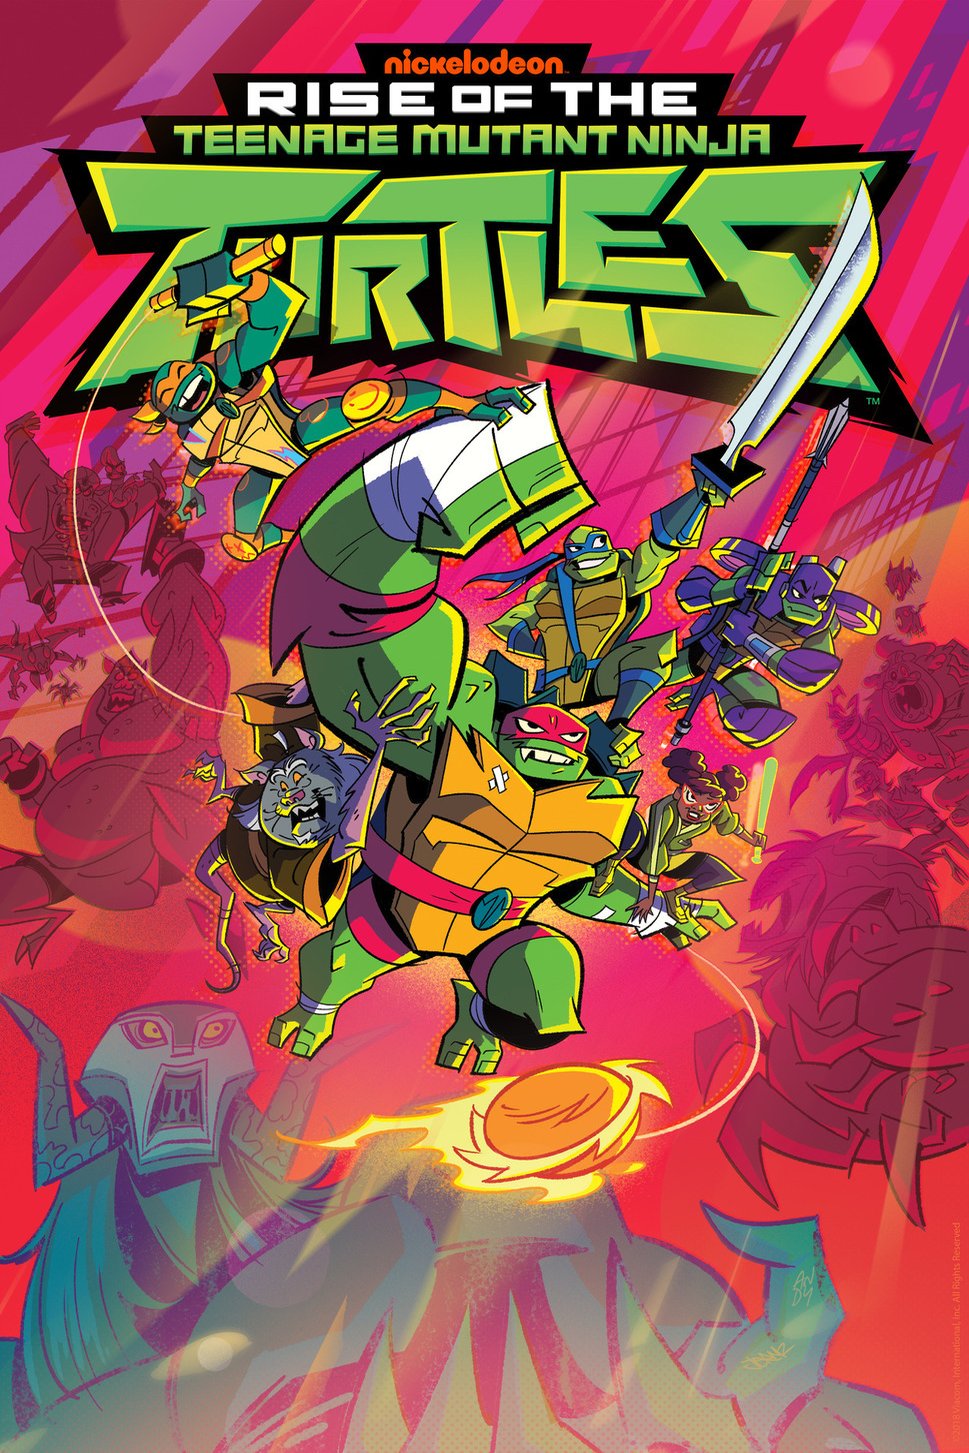 Poster of the movie Rise of the Teenage Mutant Ninja Turtles